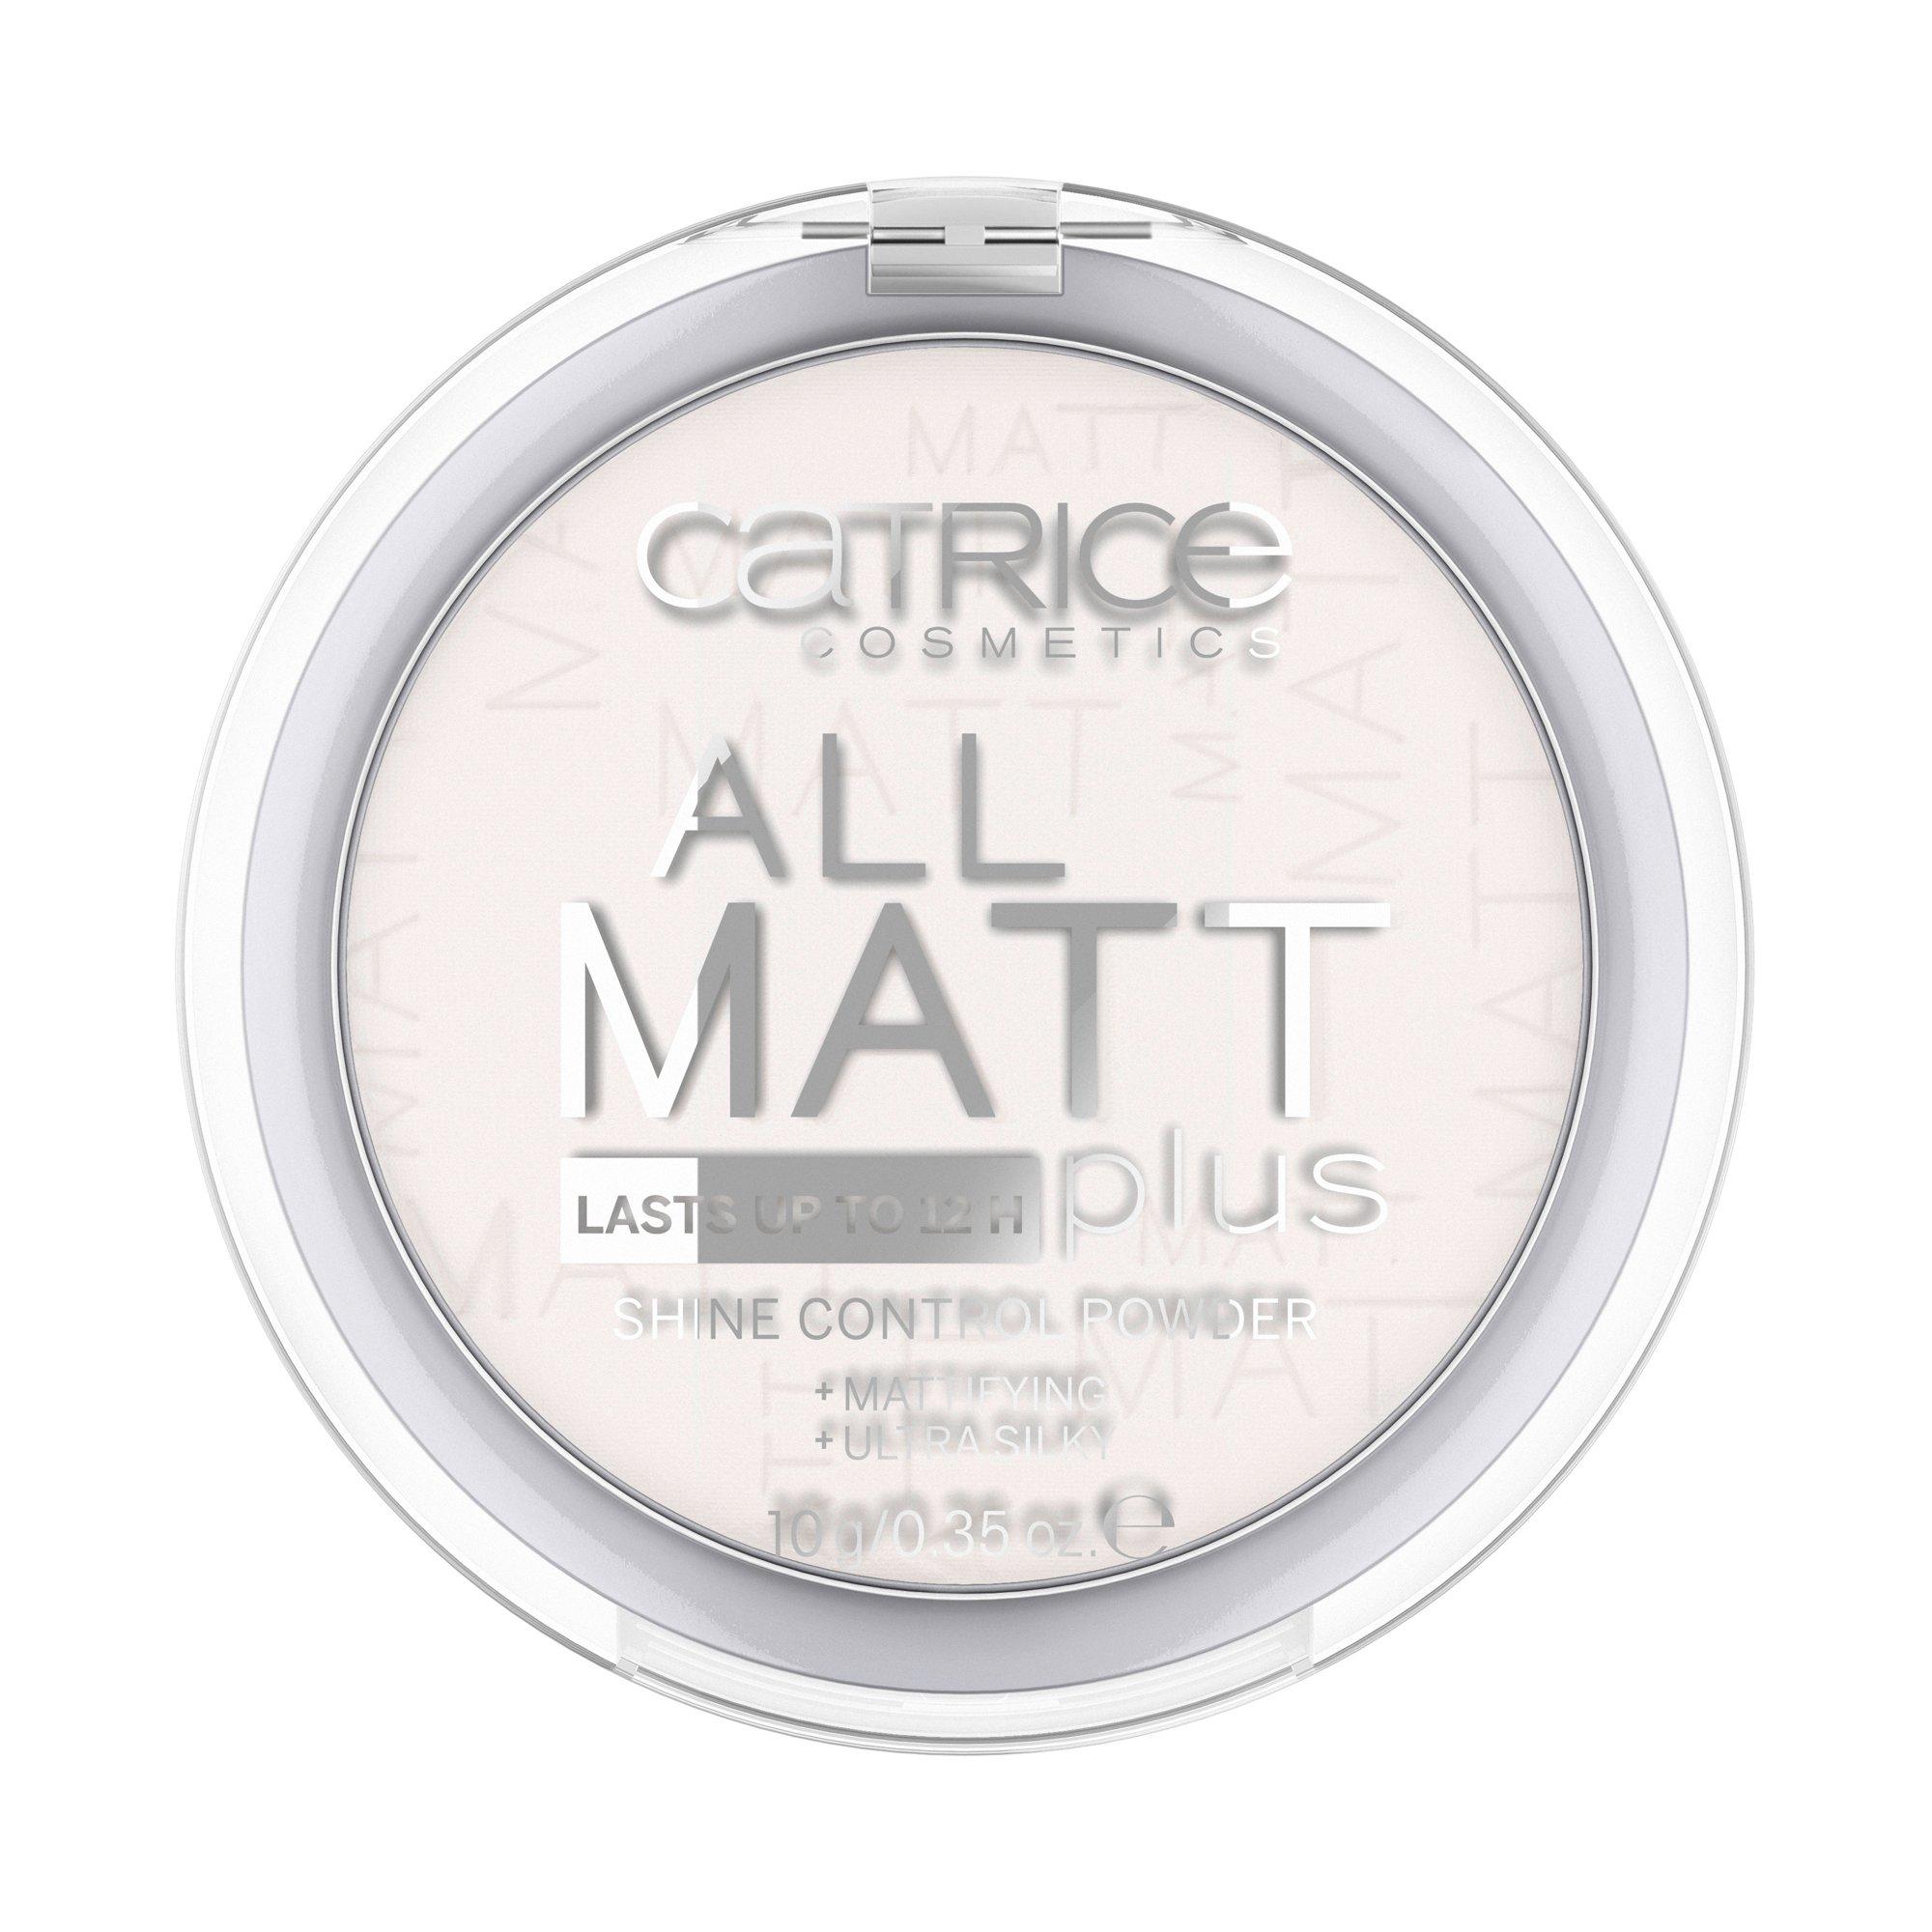 CATRICE All Matt Plus Shine Control Powder All Matt Plus Shine Control Powder 